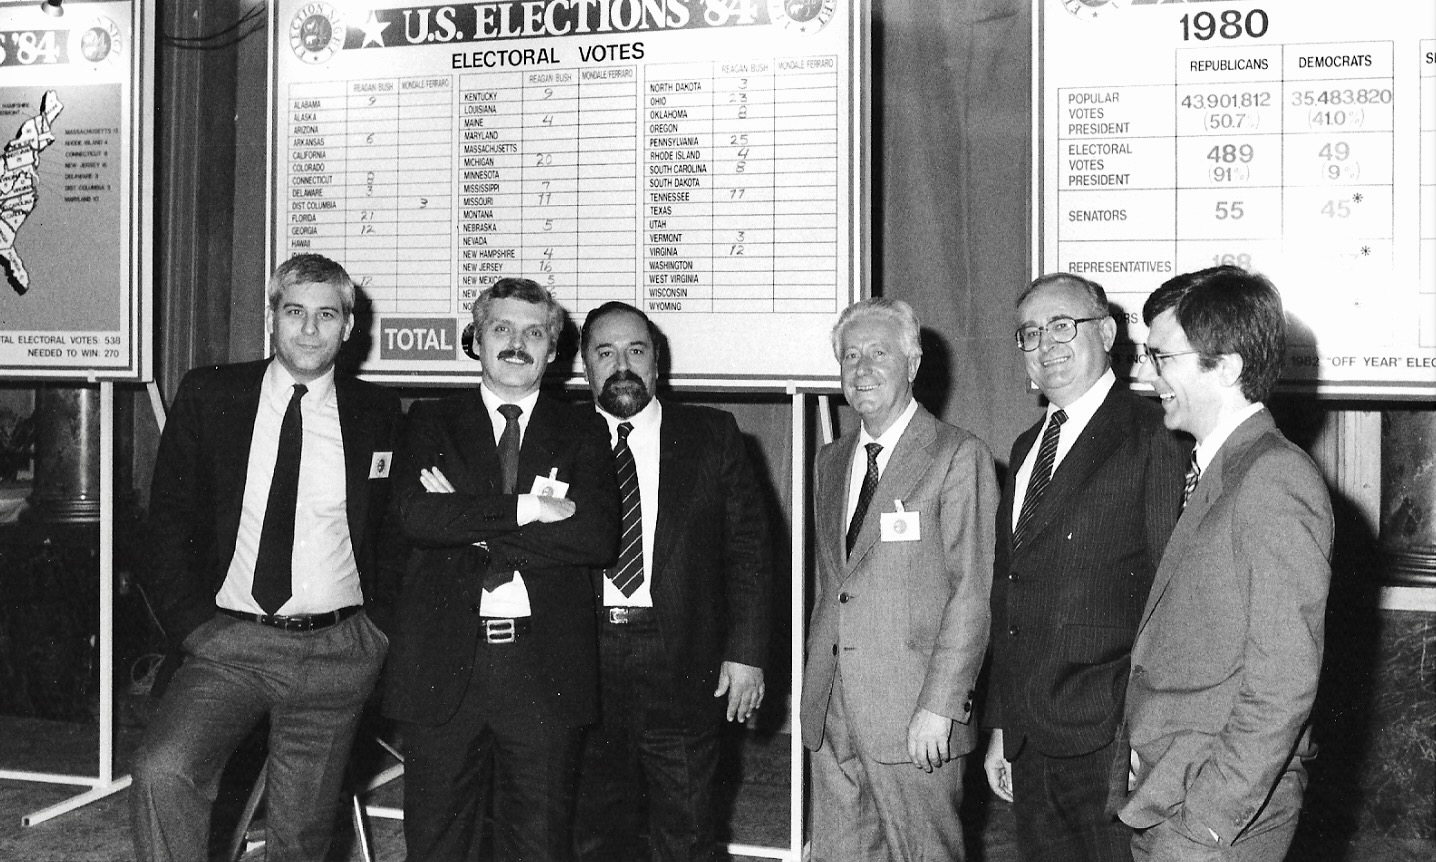 Photo caption: Election Night party at the Excelsior Hotel in Rome, 1984. L-r: David Wagner, Michael Canning, Bruno Scarfi, Enrico Chini, Leonard J. Baldyga, Joe B. Johnson.